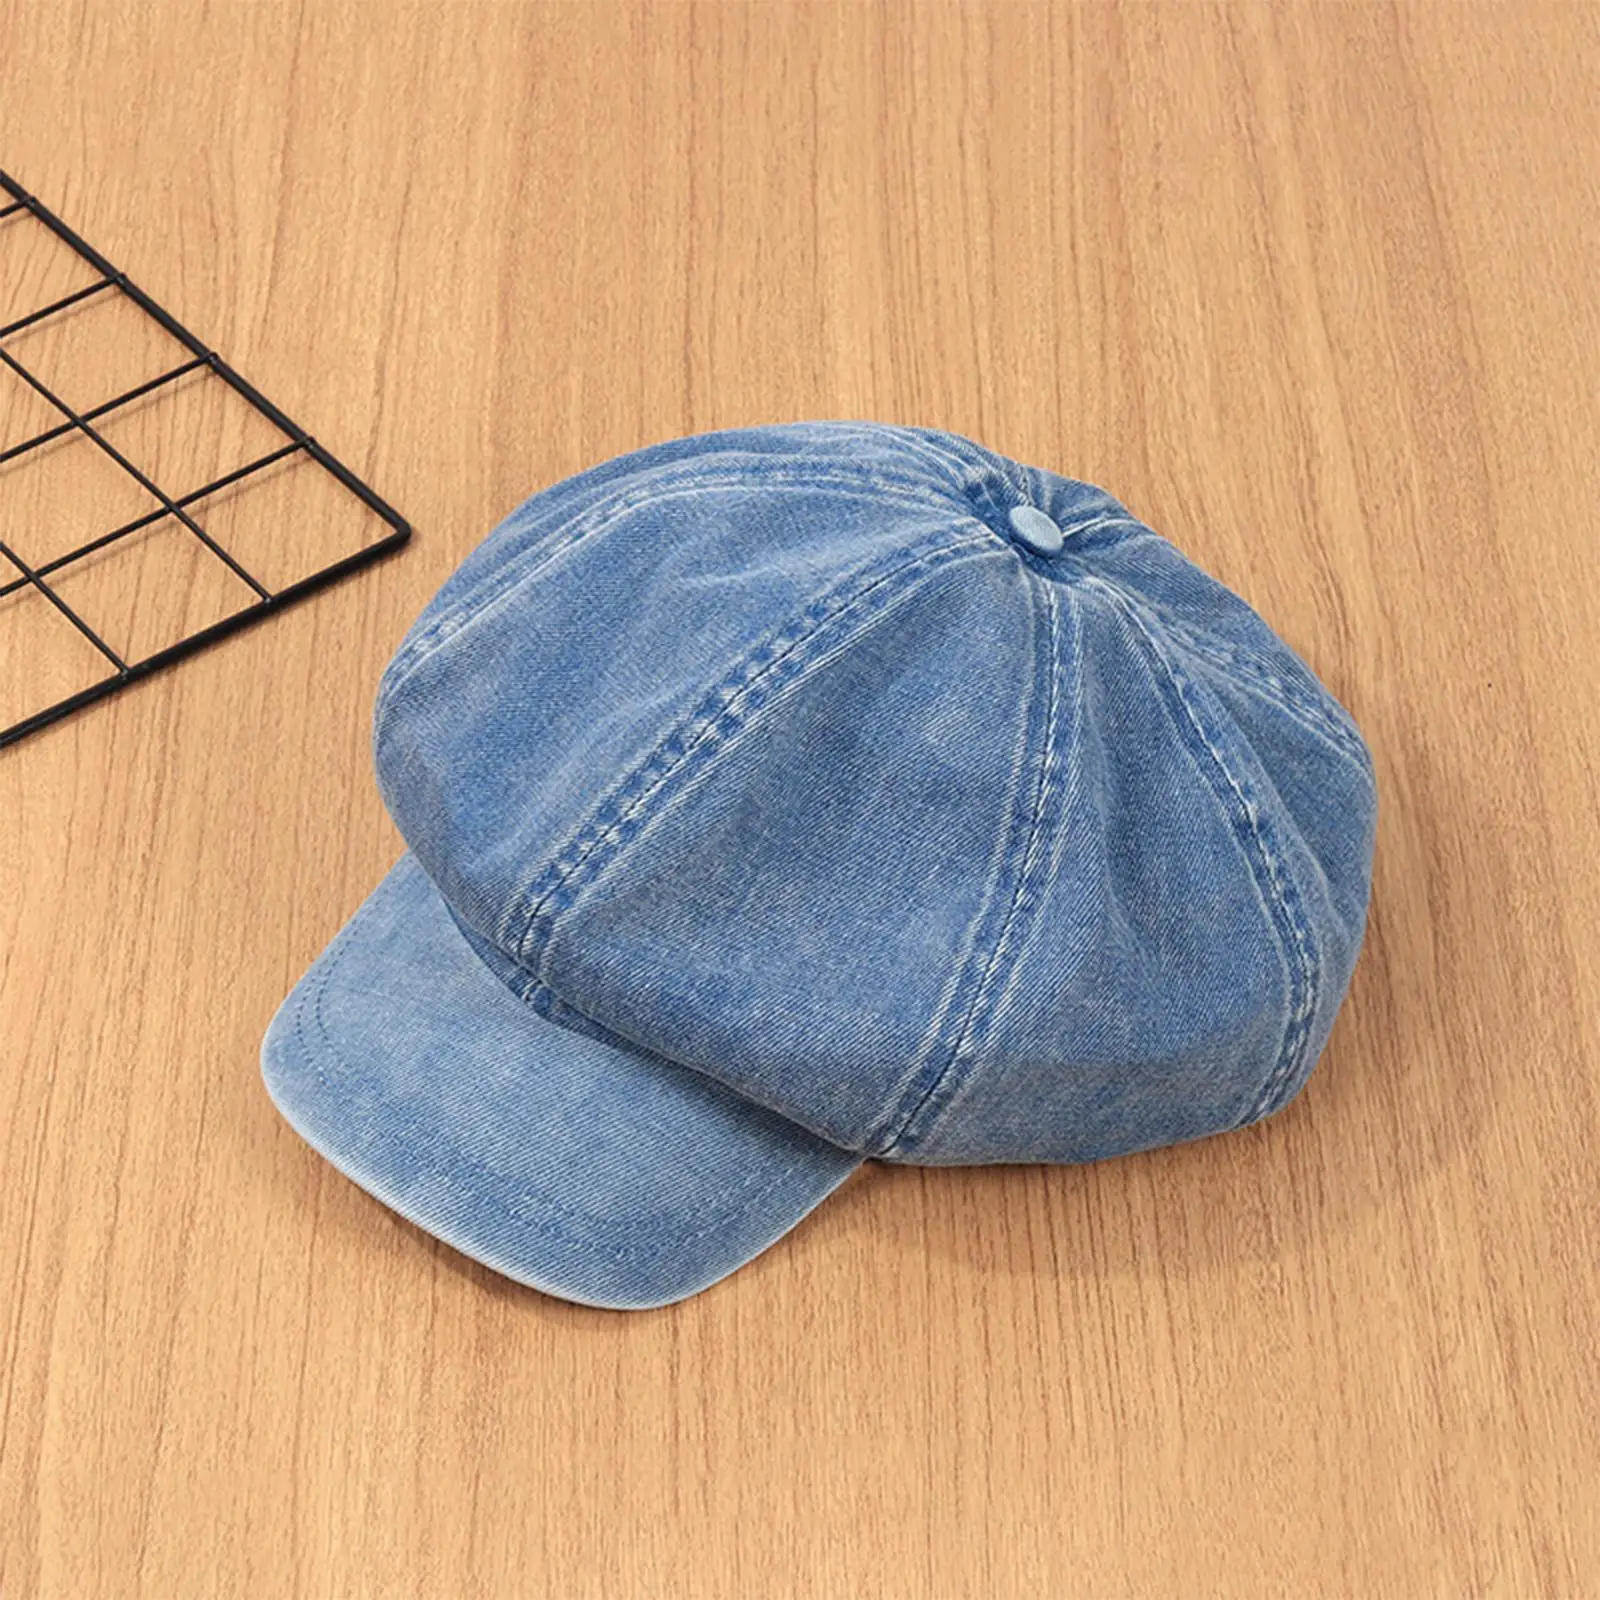 Cotton Denim Beret Hat Men Women Fashion Spring Vintage Newsboy Flat Caps Octagonal Hats